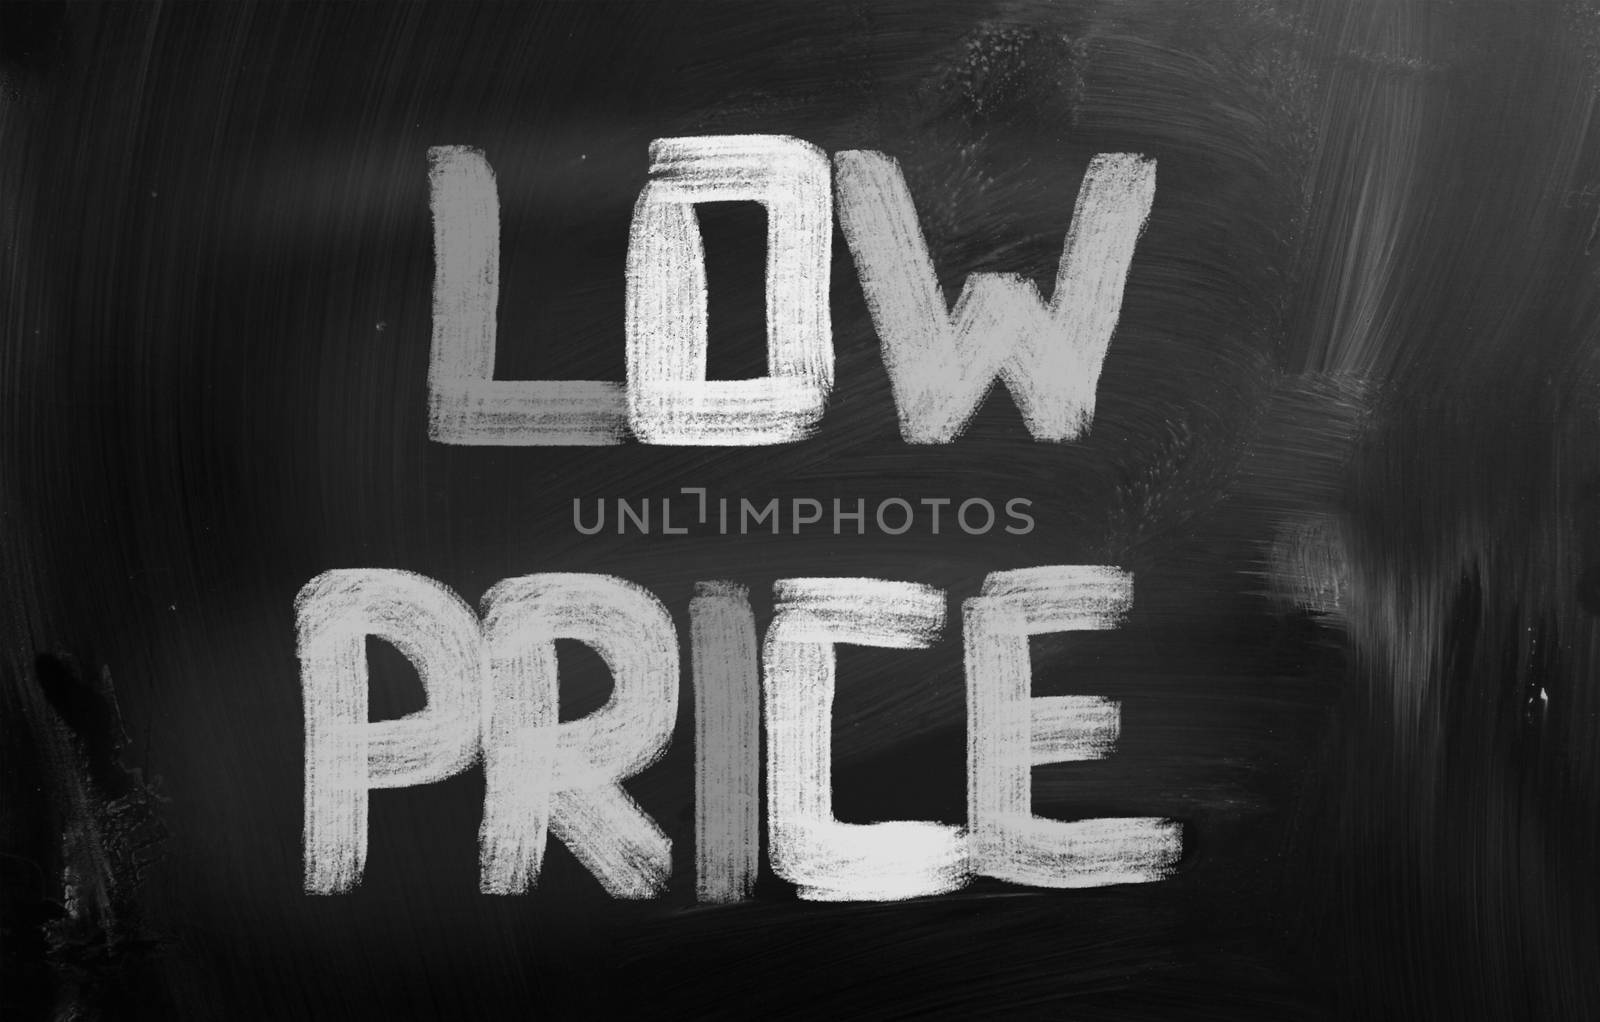 Low Price Concept